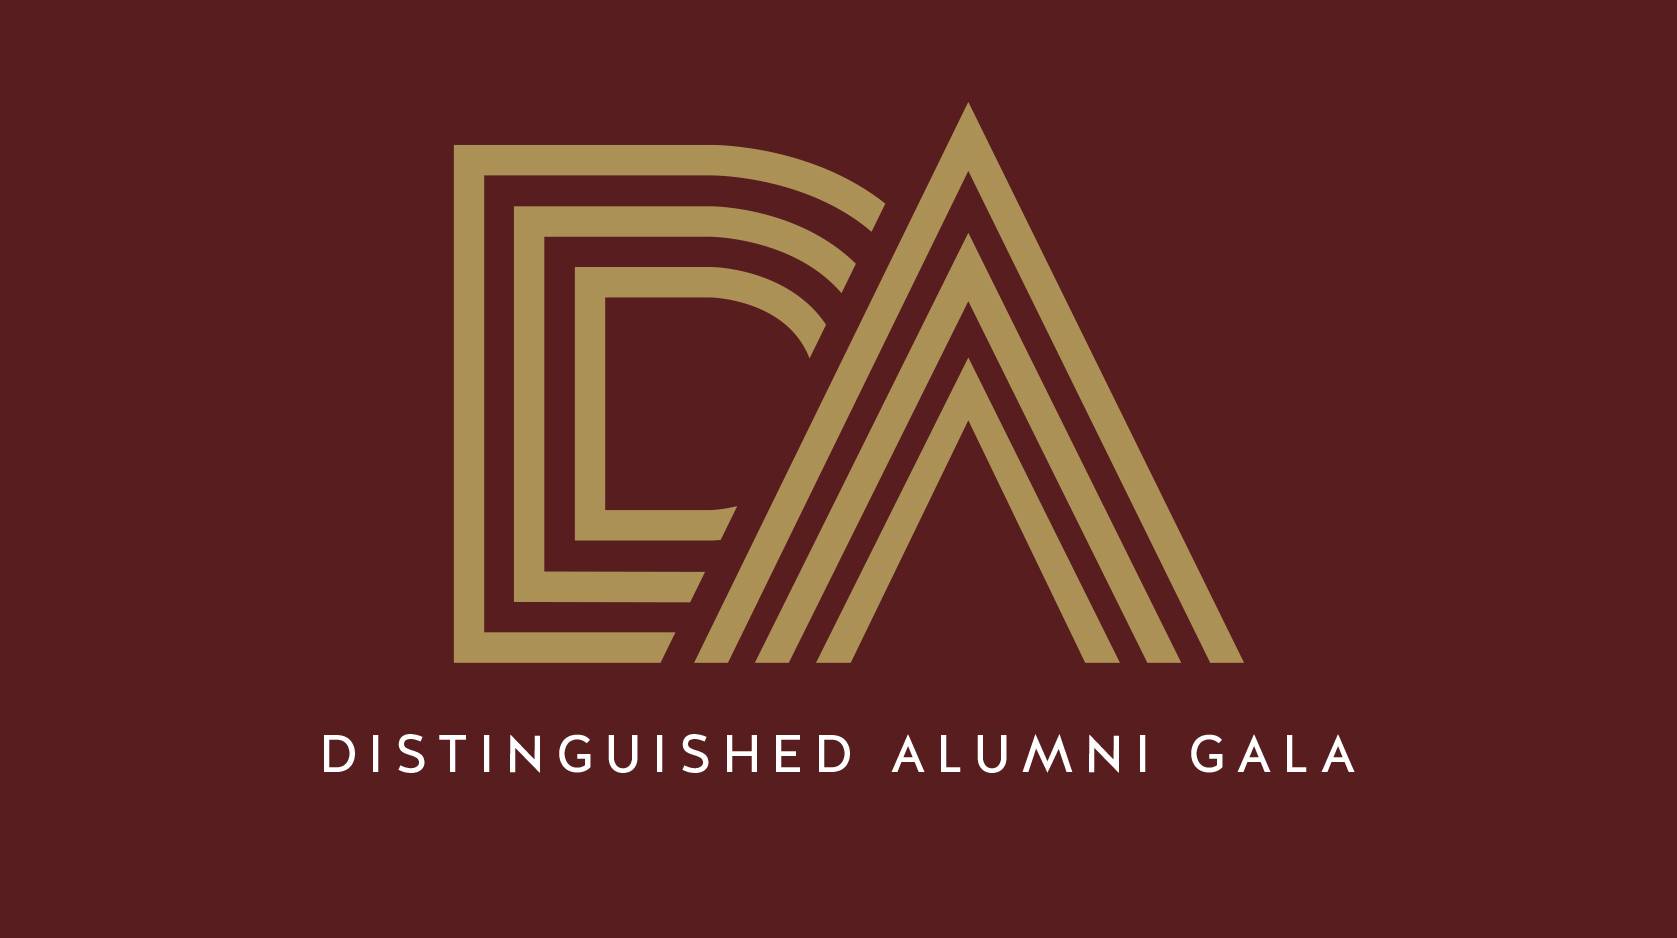 graphic reading "distinguished alumni gala"